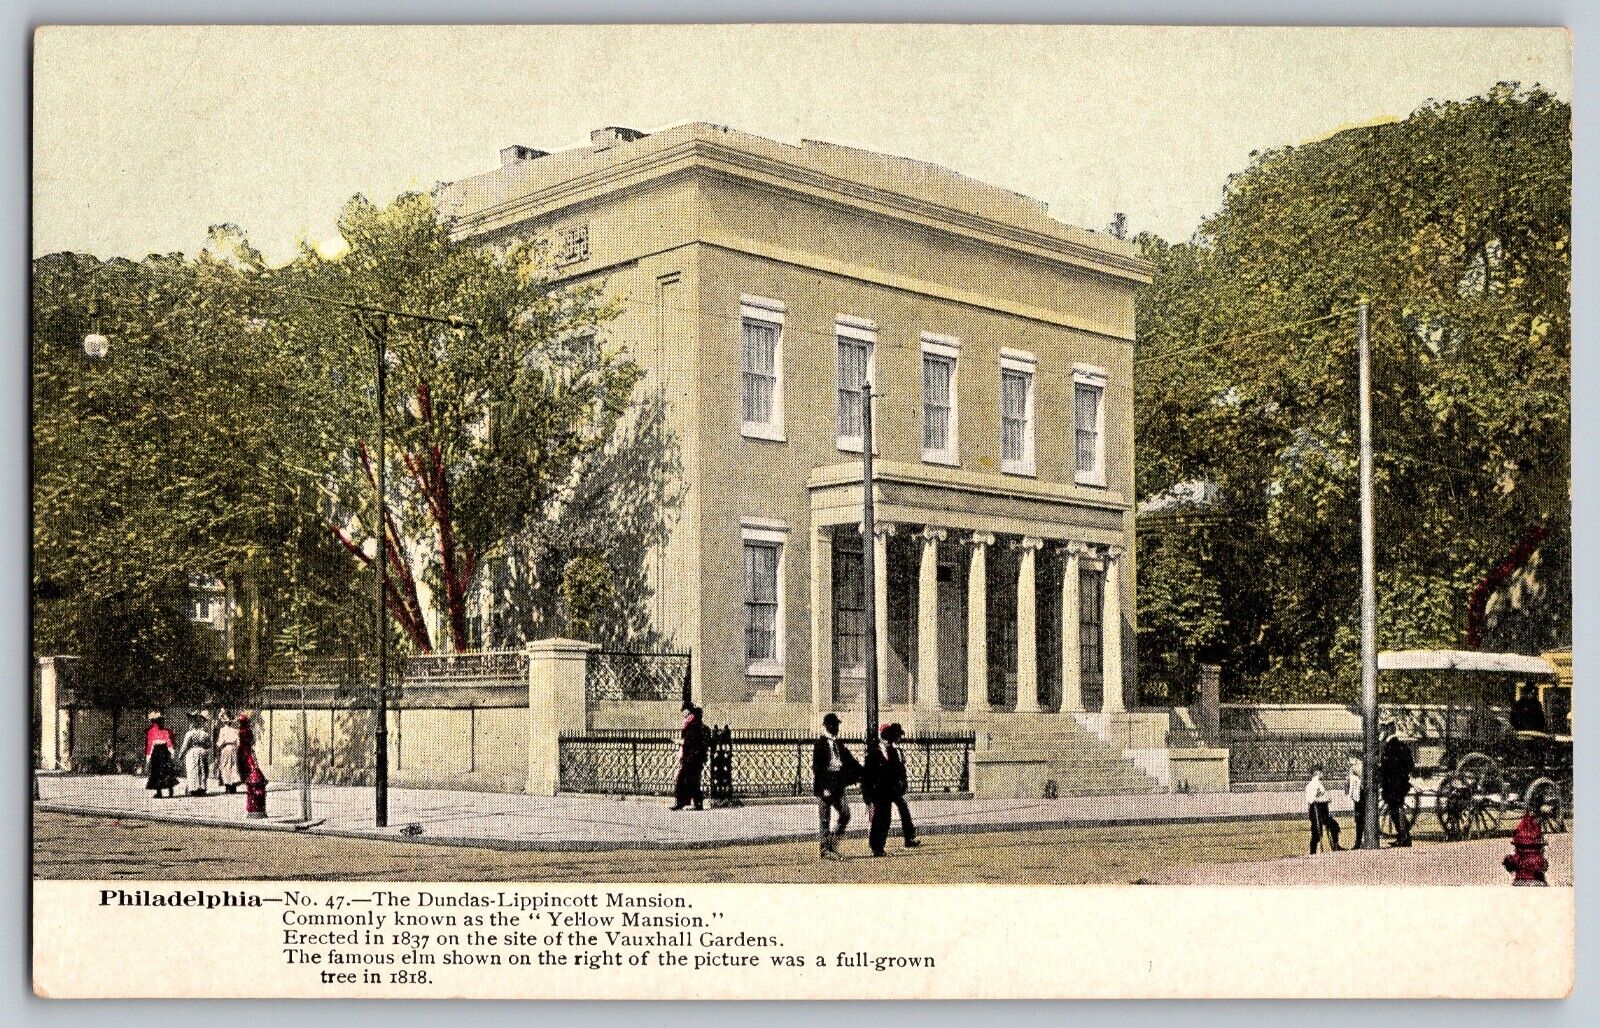 Philadelphia, Pennsylvania - The Dundas-Lippincott Mansion - Vintage Postcard